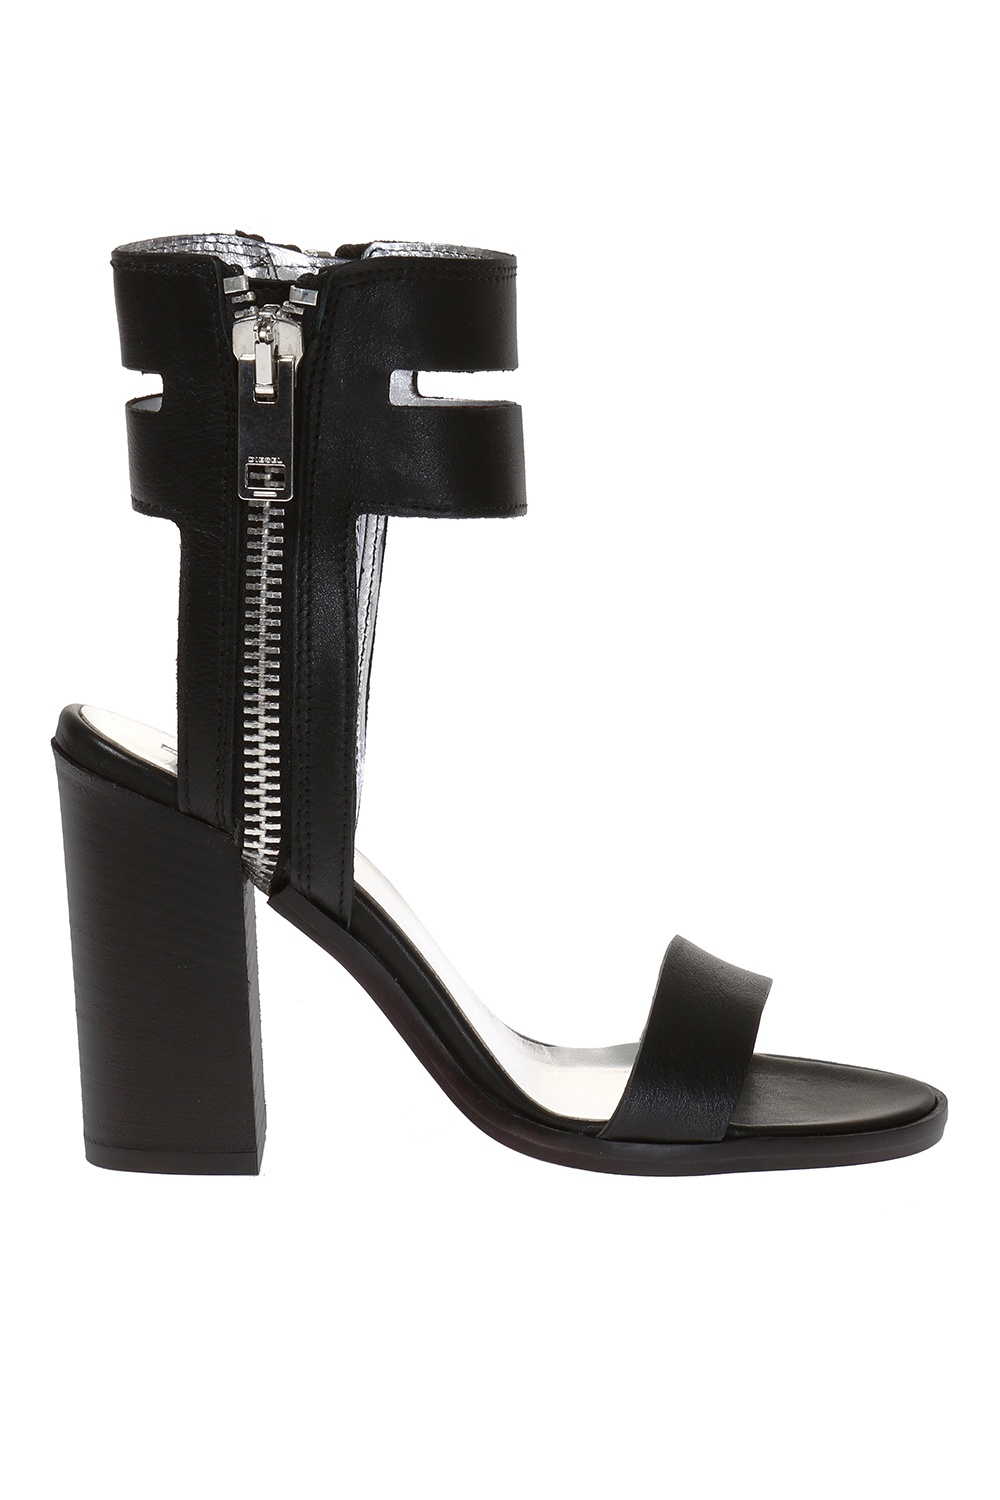 'D-Zippher HS' heeled sandals Diesel - Vitkac TW